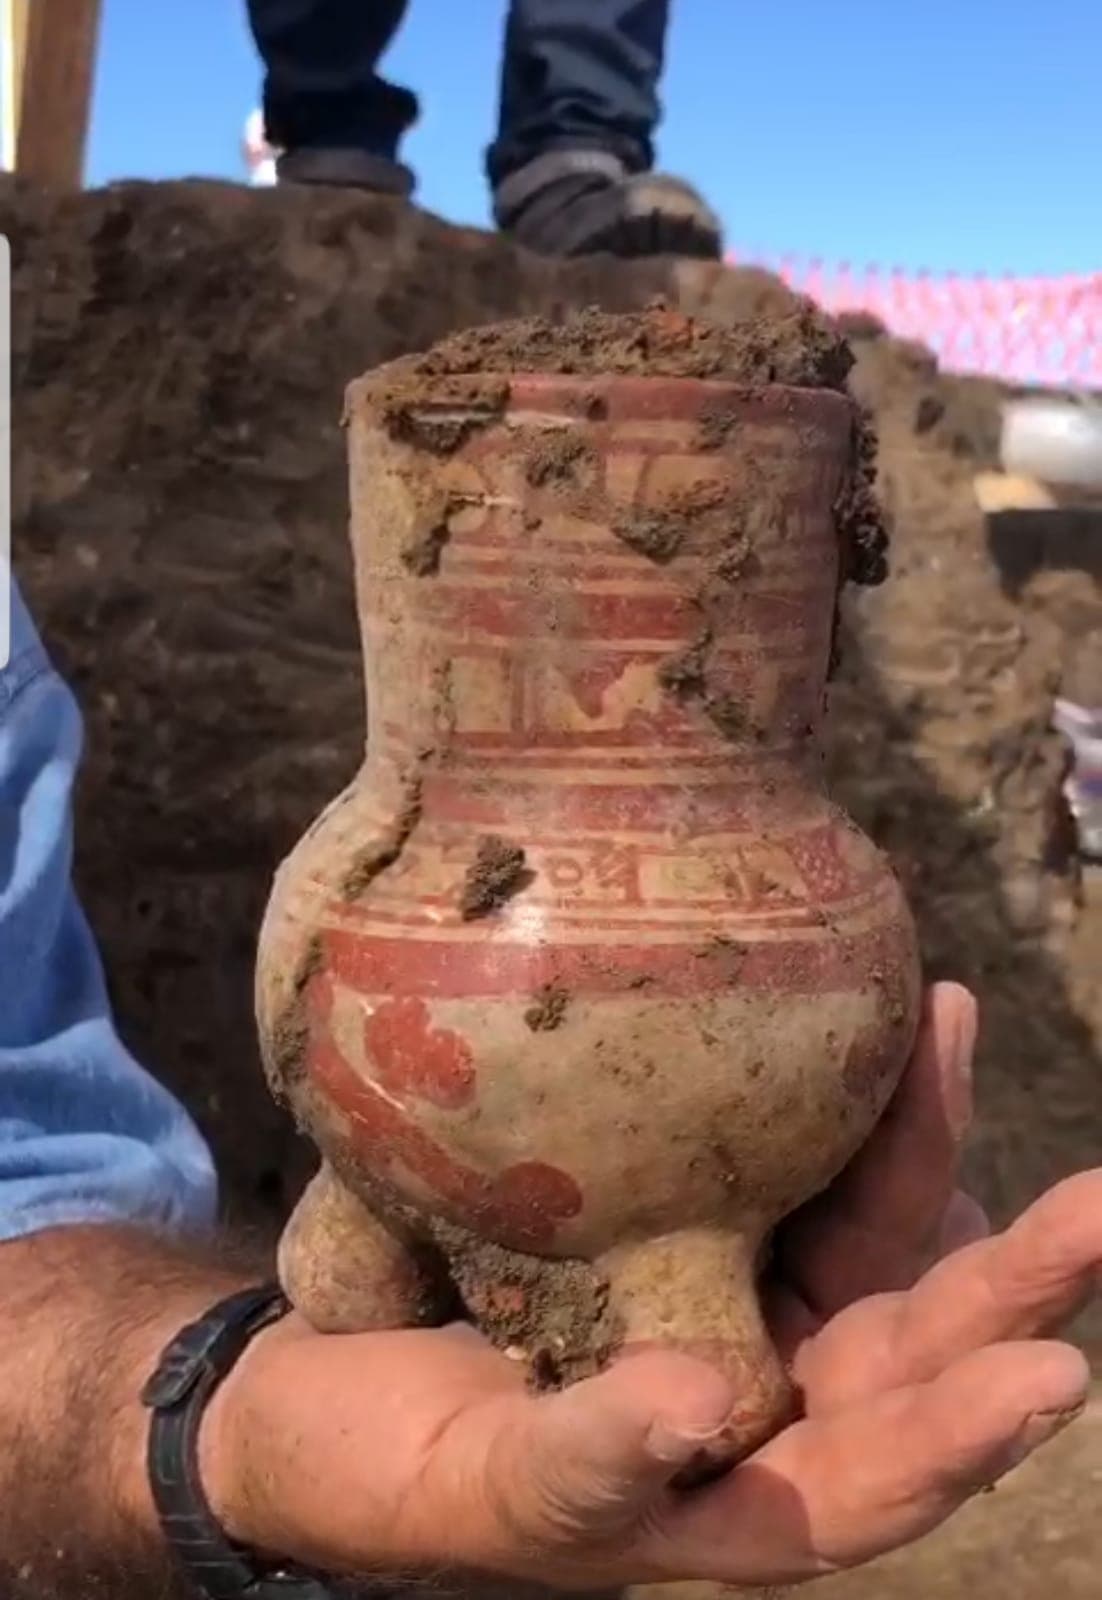 New archaeological site of the Aztatlán culture found in Mazatlán.